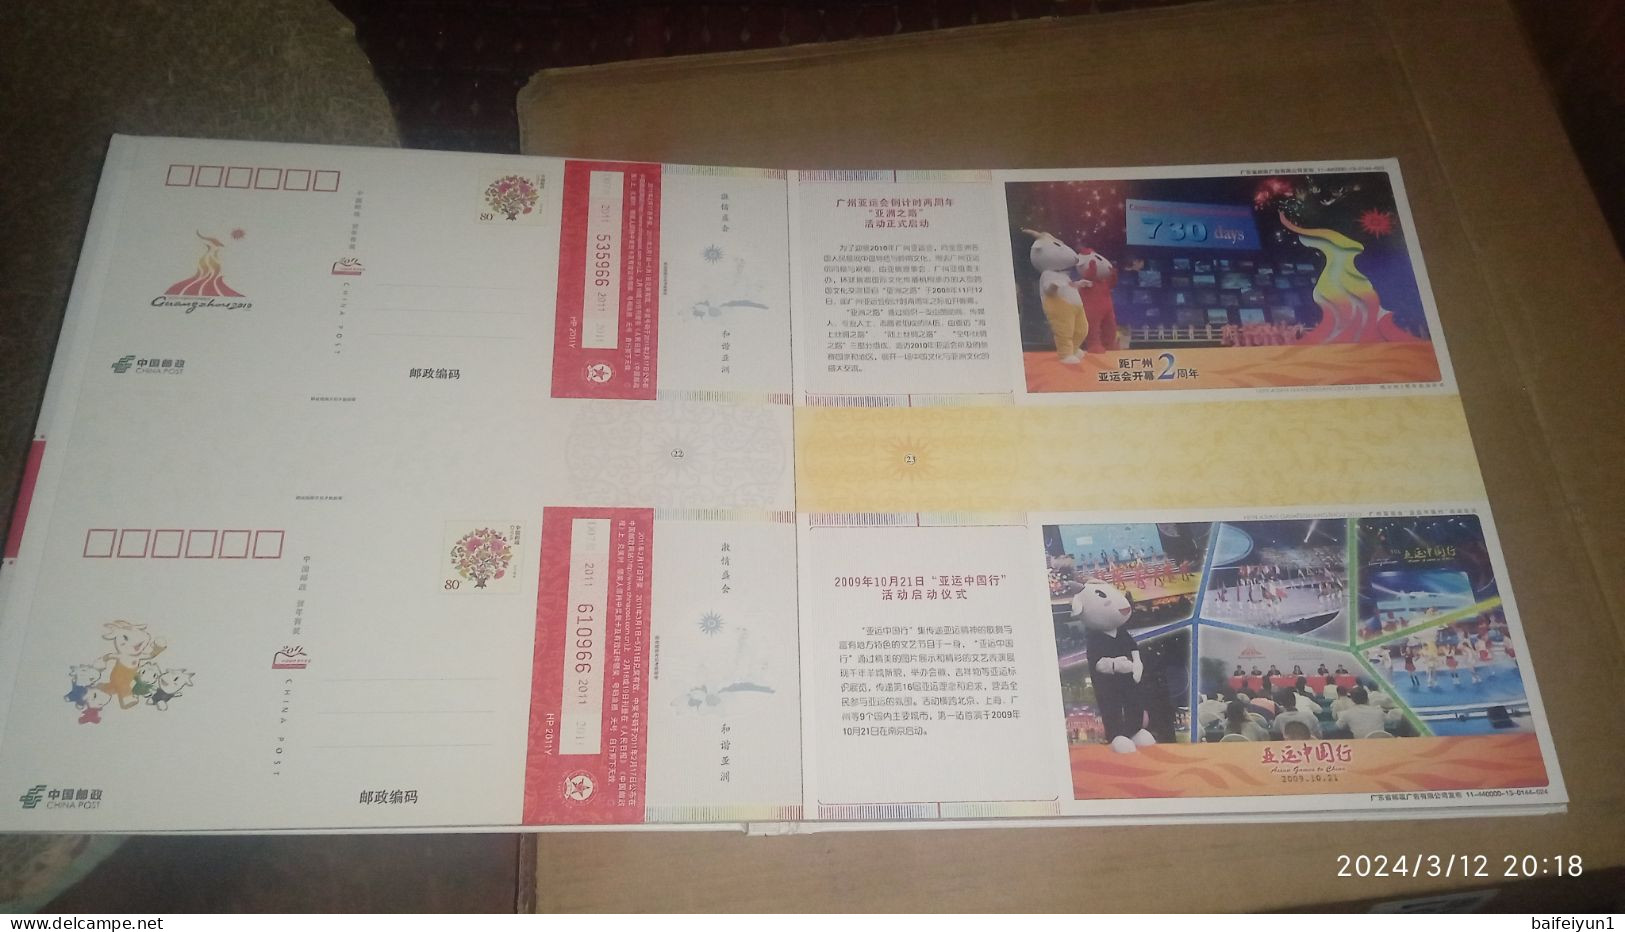 2010 China Guangzhou16th  Asian Game Mascot and Emble Postal cards Album